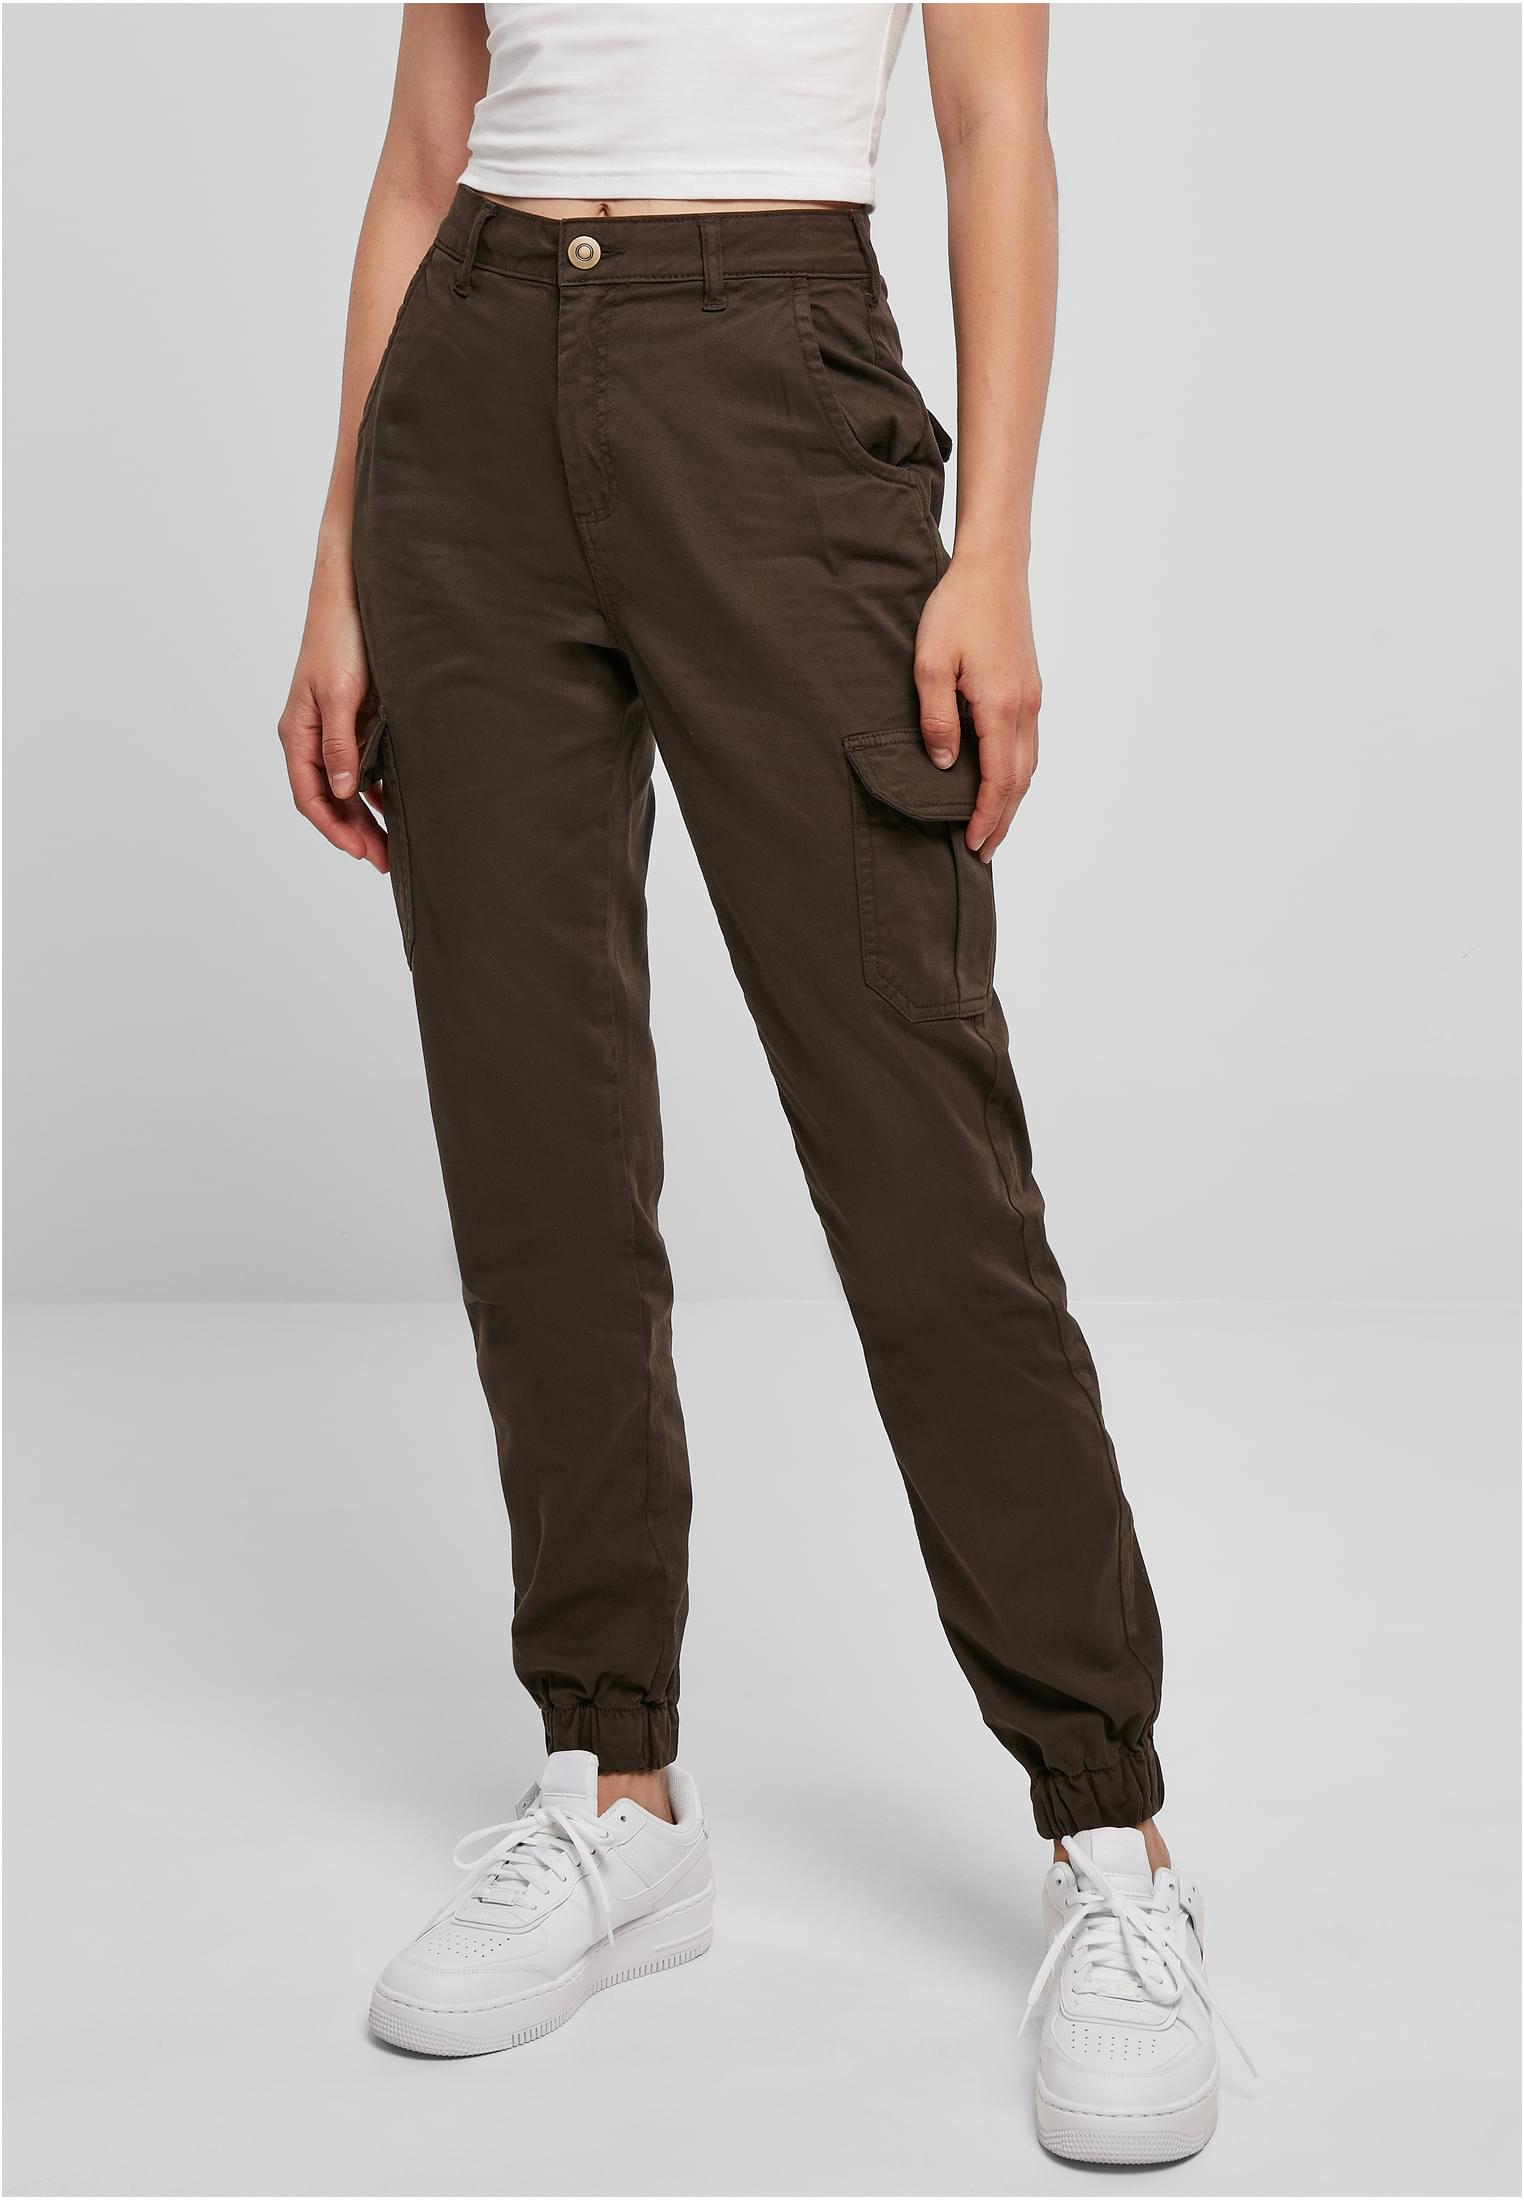 Women's high-waisted cargo pants brown